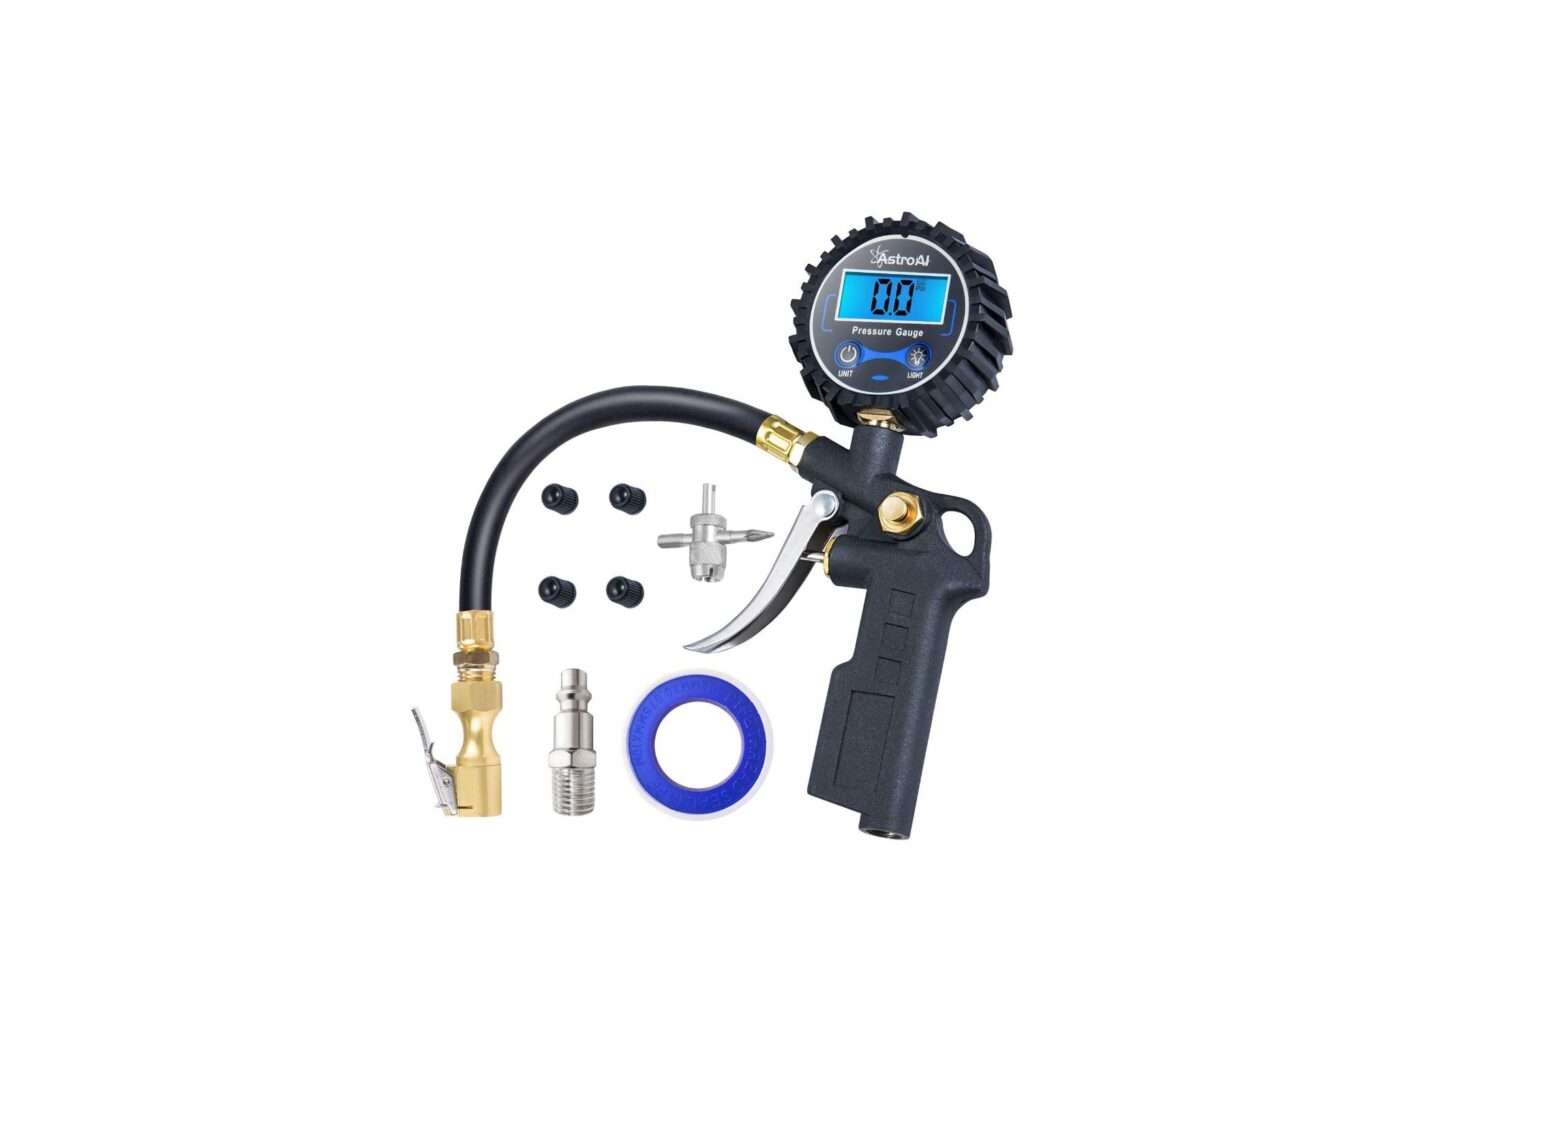 AstroAI Digital Tire Inflator with Pressure Gauge User Manual - Featured image